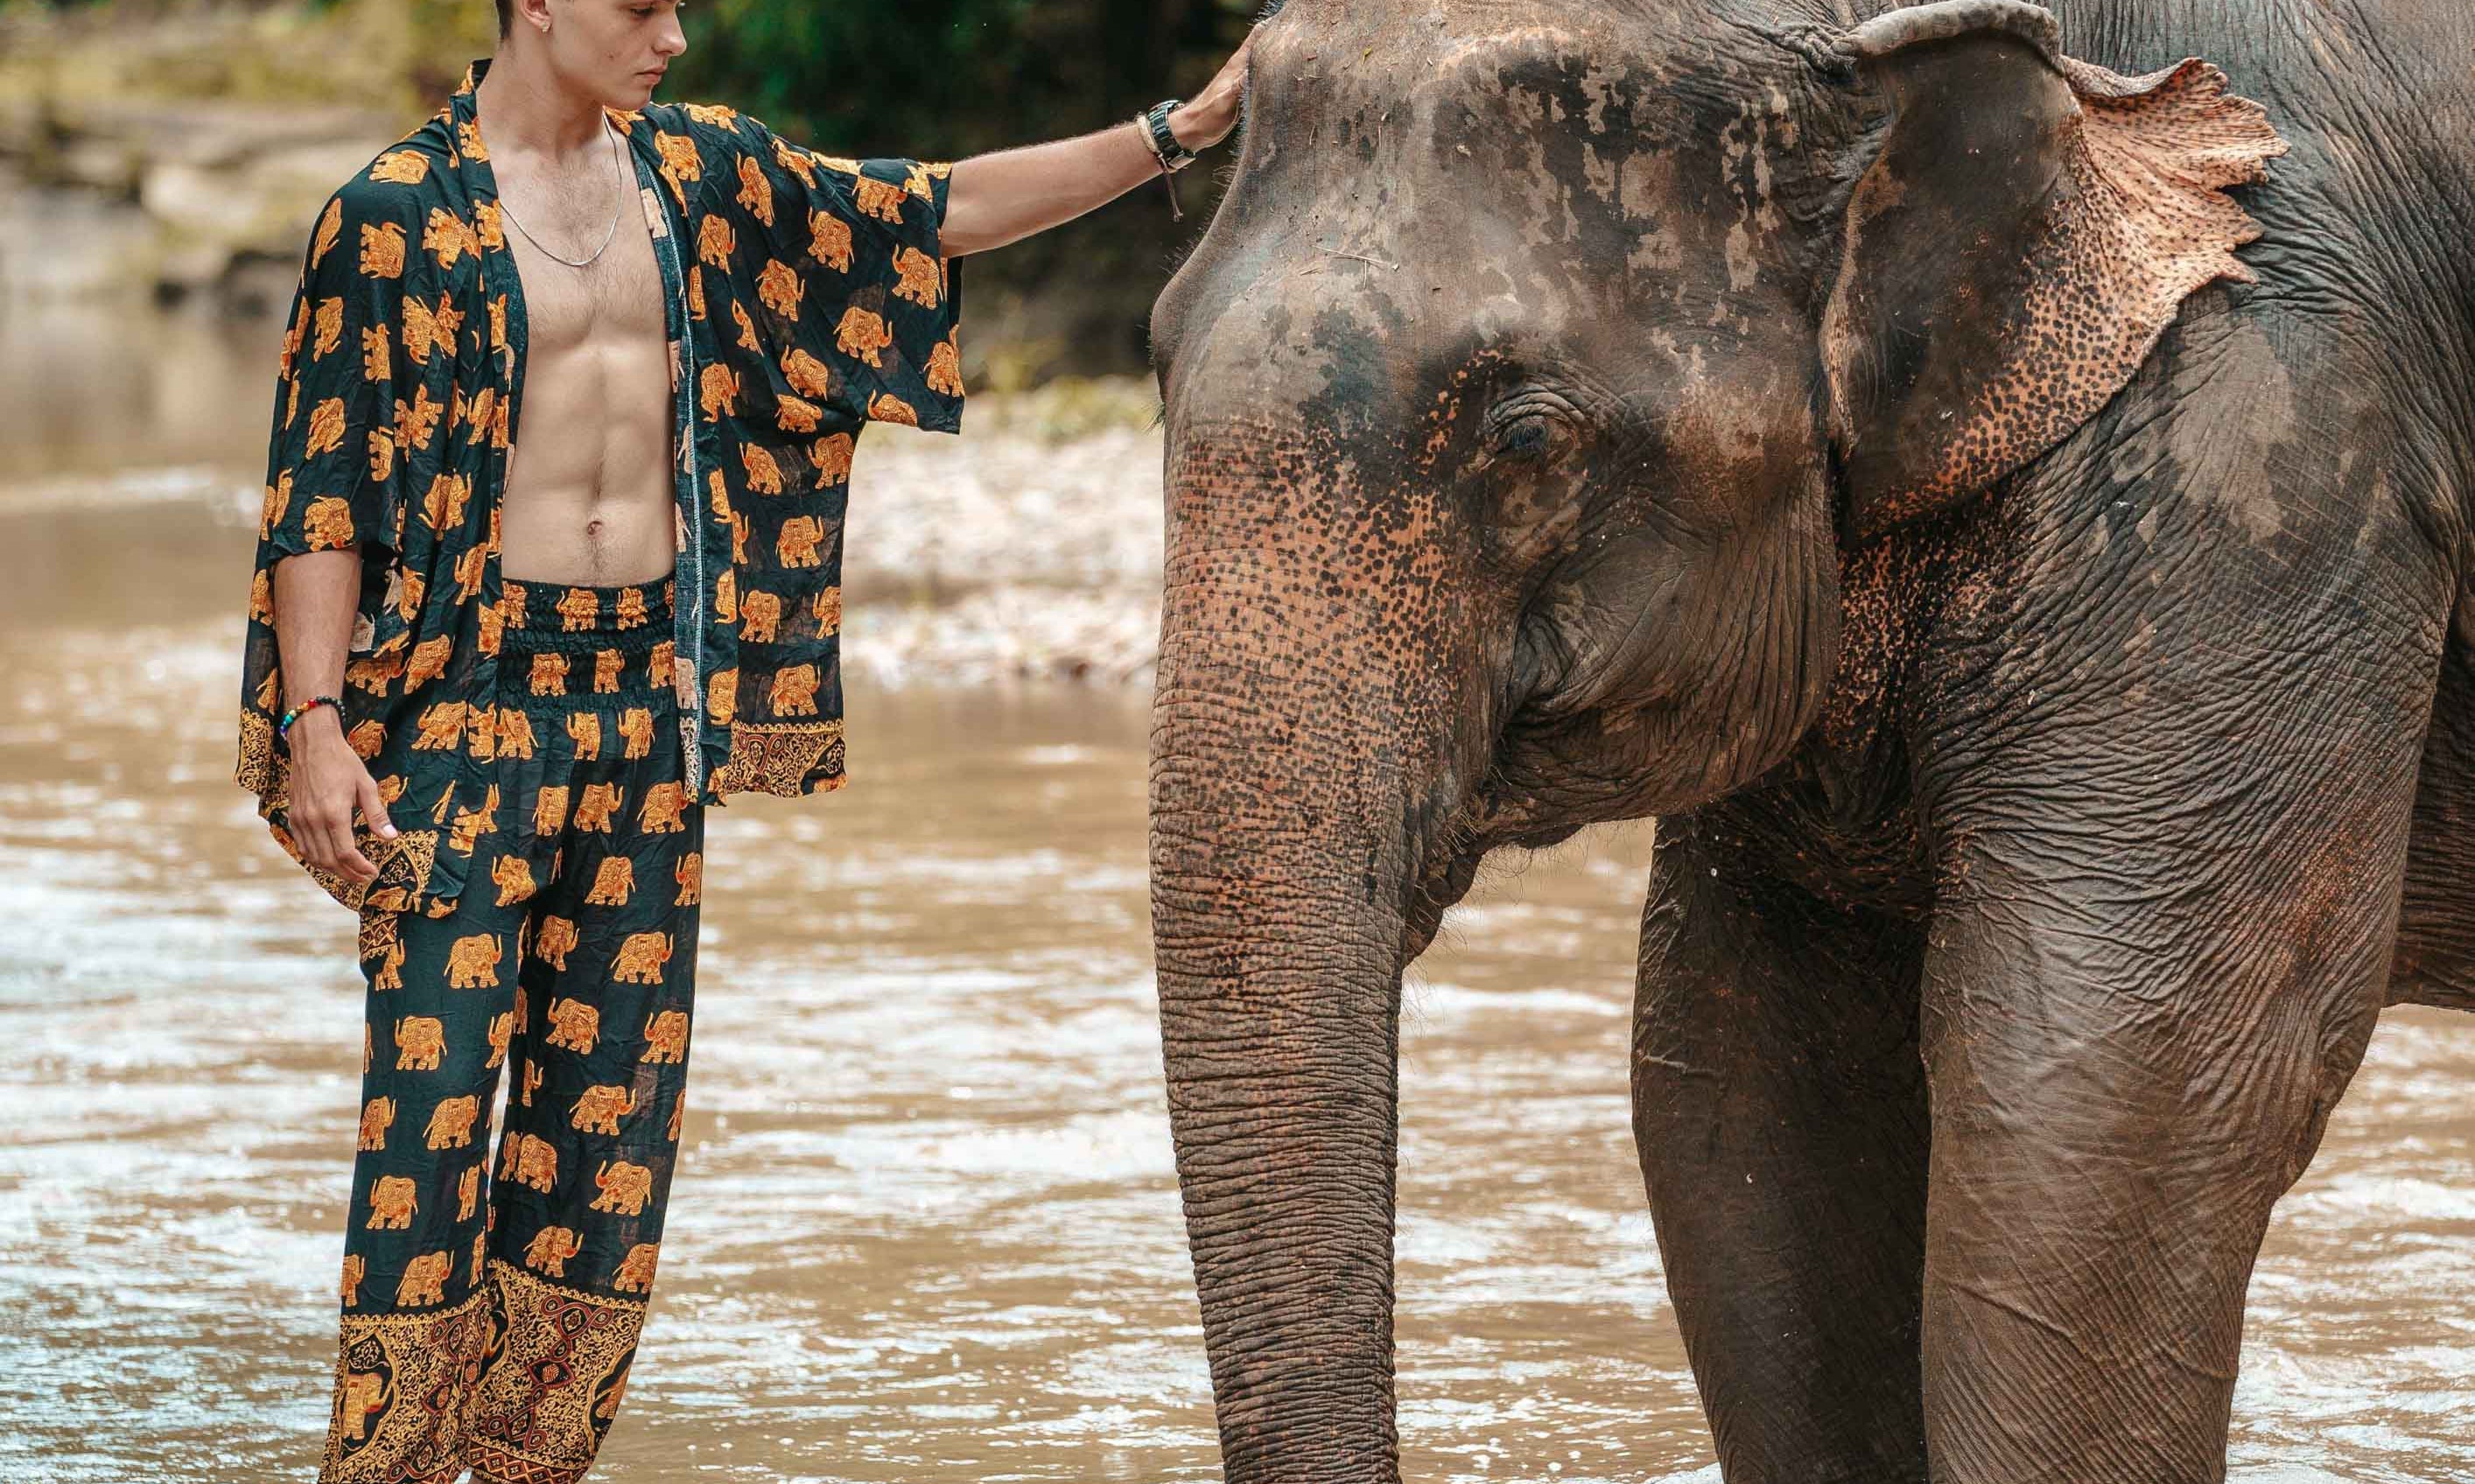 Savanna Kimono Elepanta Men's Kimonos - Buy Today Elephant Pants Jewelry And Bohemian Clothes Handmade In Thailand Help To Save The Elephants FairTrade And Vegan